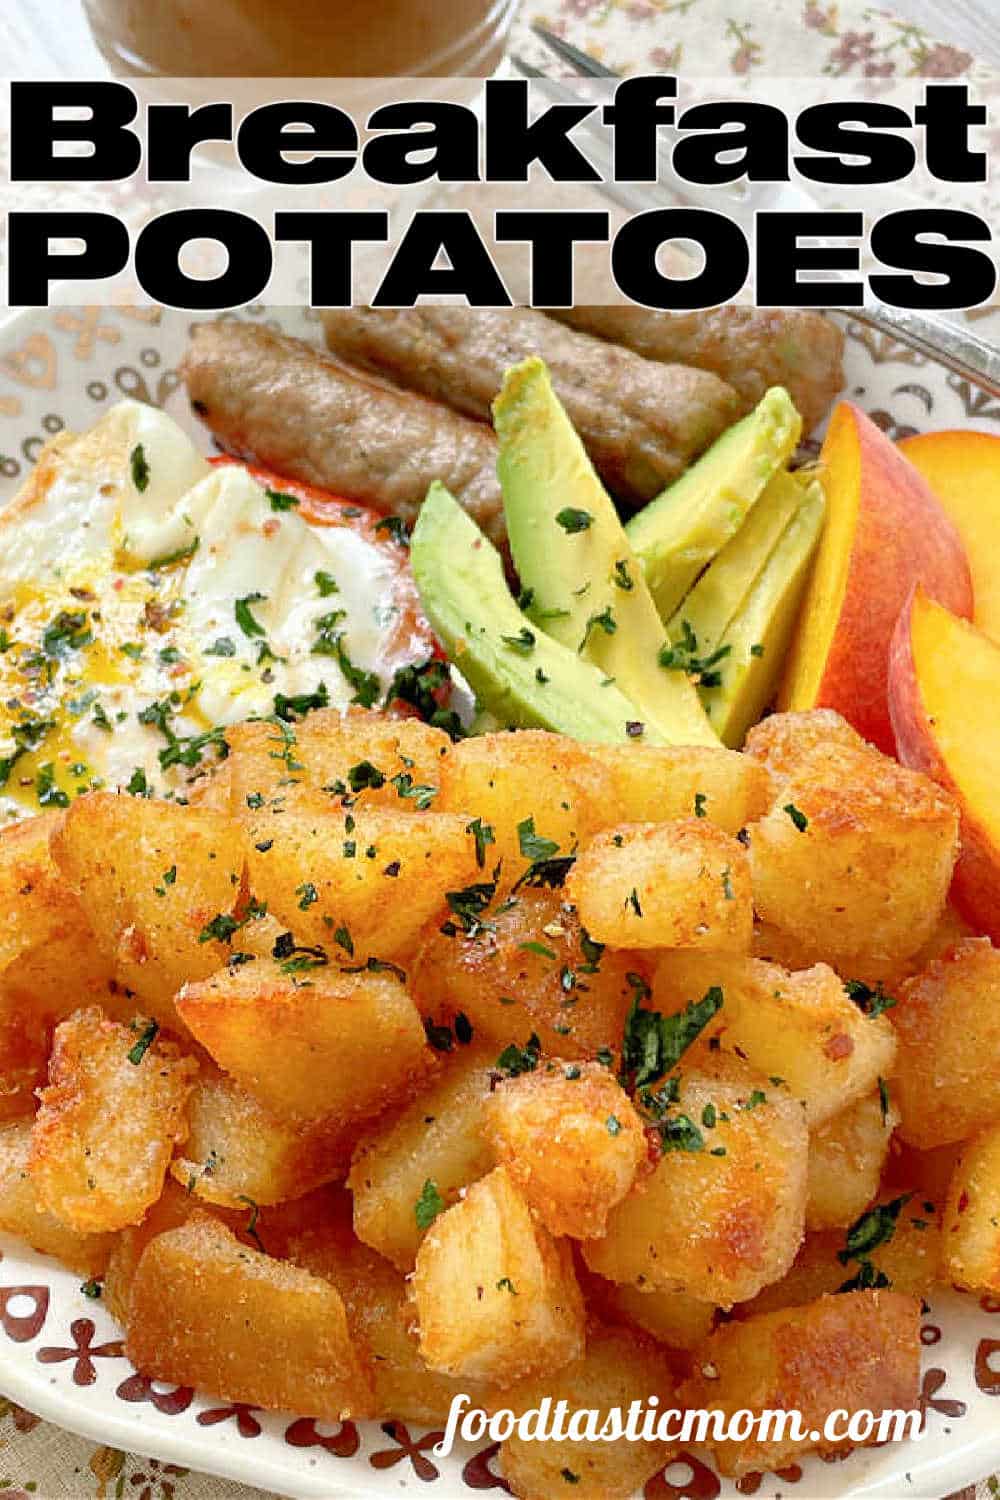 Breakfast Potatoes | Foodtastic Mom #breakfastpotatoes #breakfastpotatoeseasy #potatorecipes via @foodtasticmom